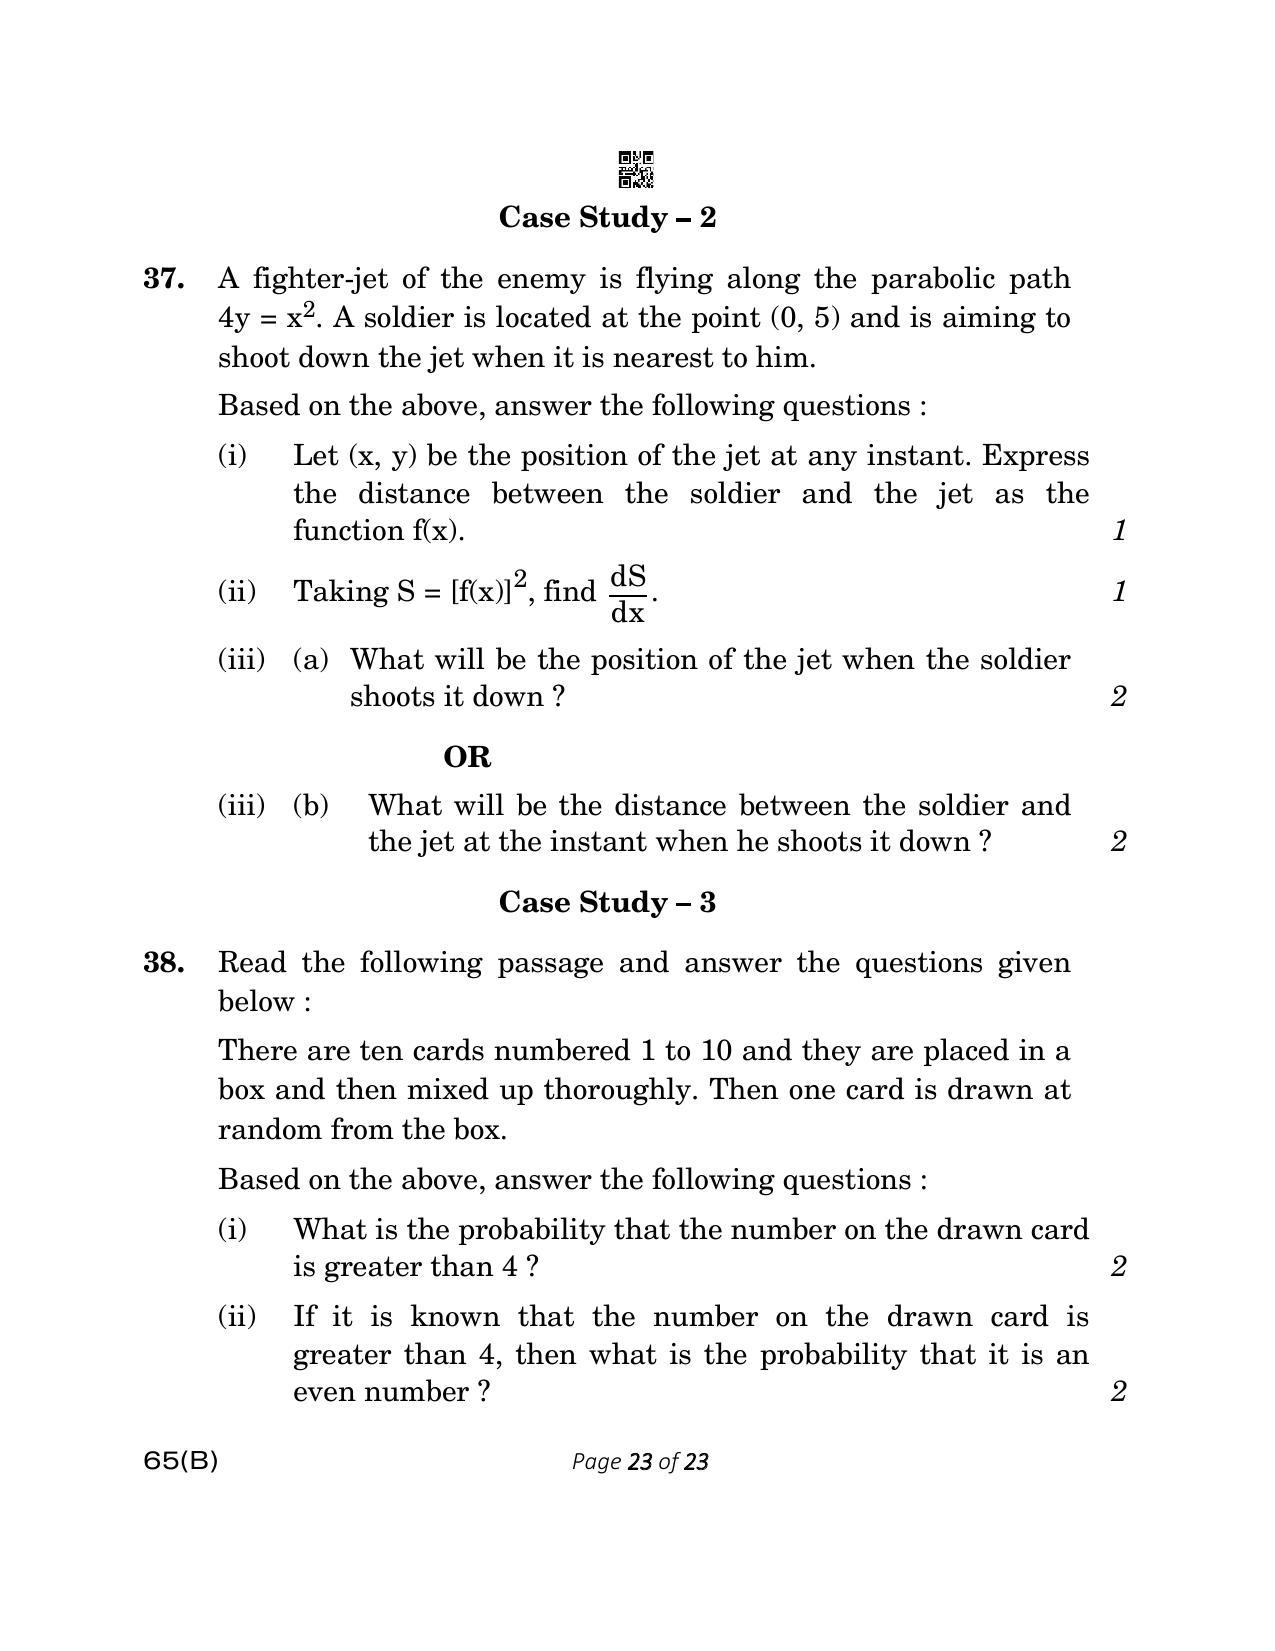 CBSE Class 12 65(B) MATHEMATICS FOR VI 2023 Question Paper - Page 23